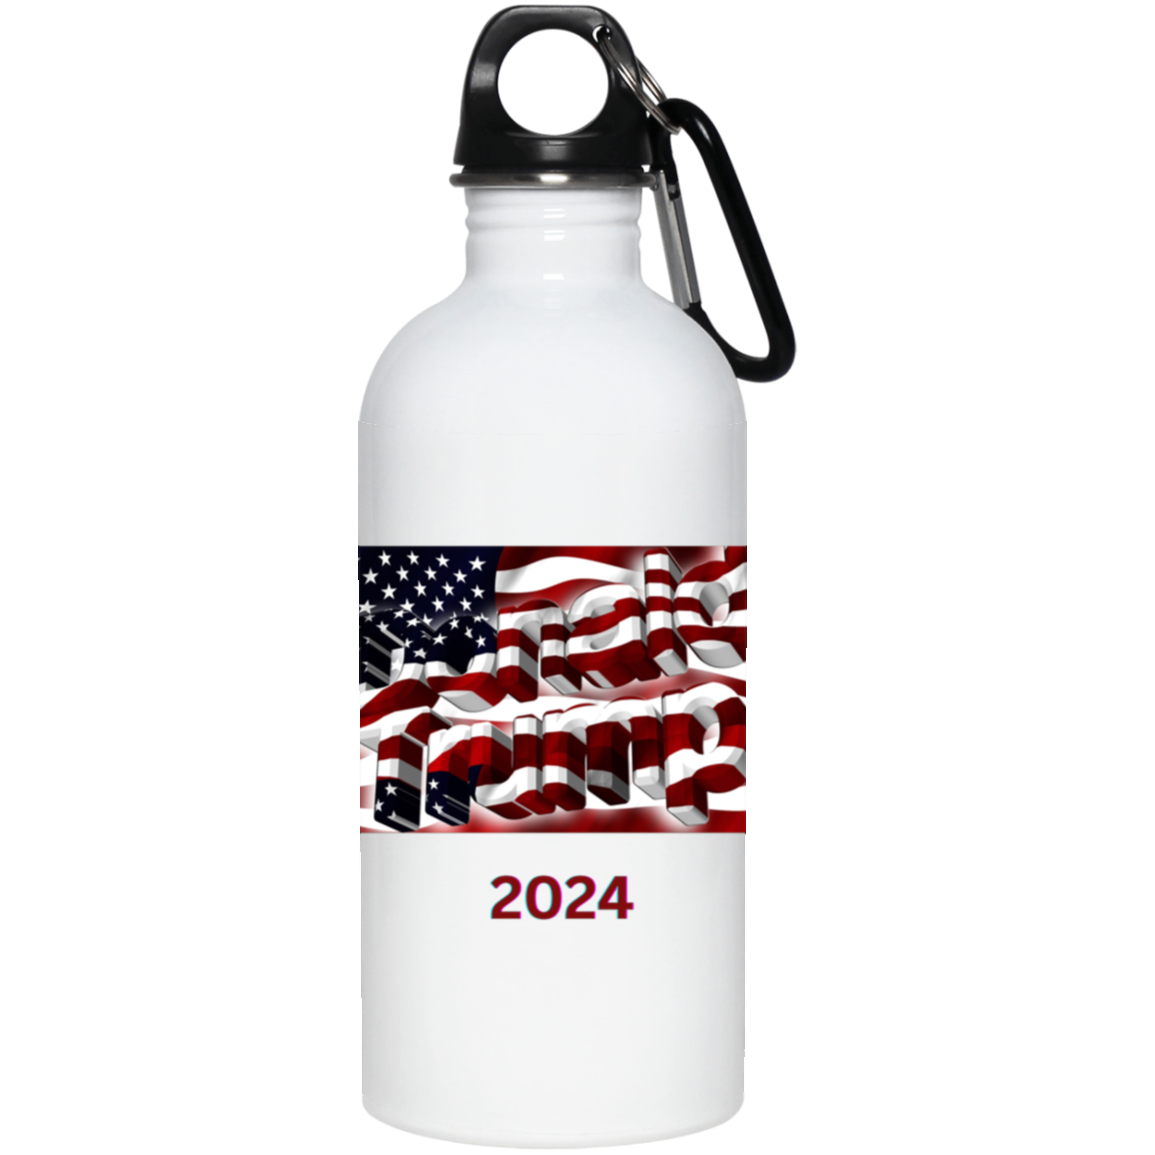 Trump 2024 20 oz. Stainless Steel Water Bottle